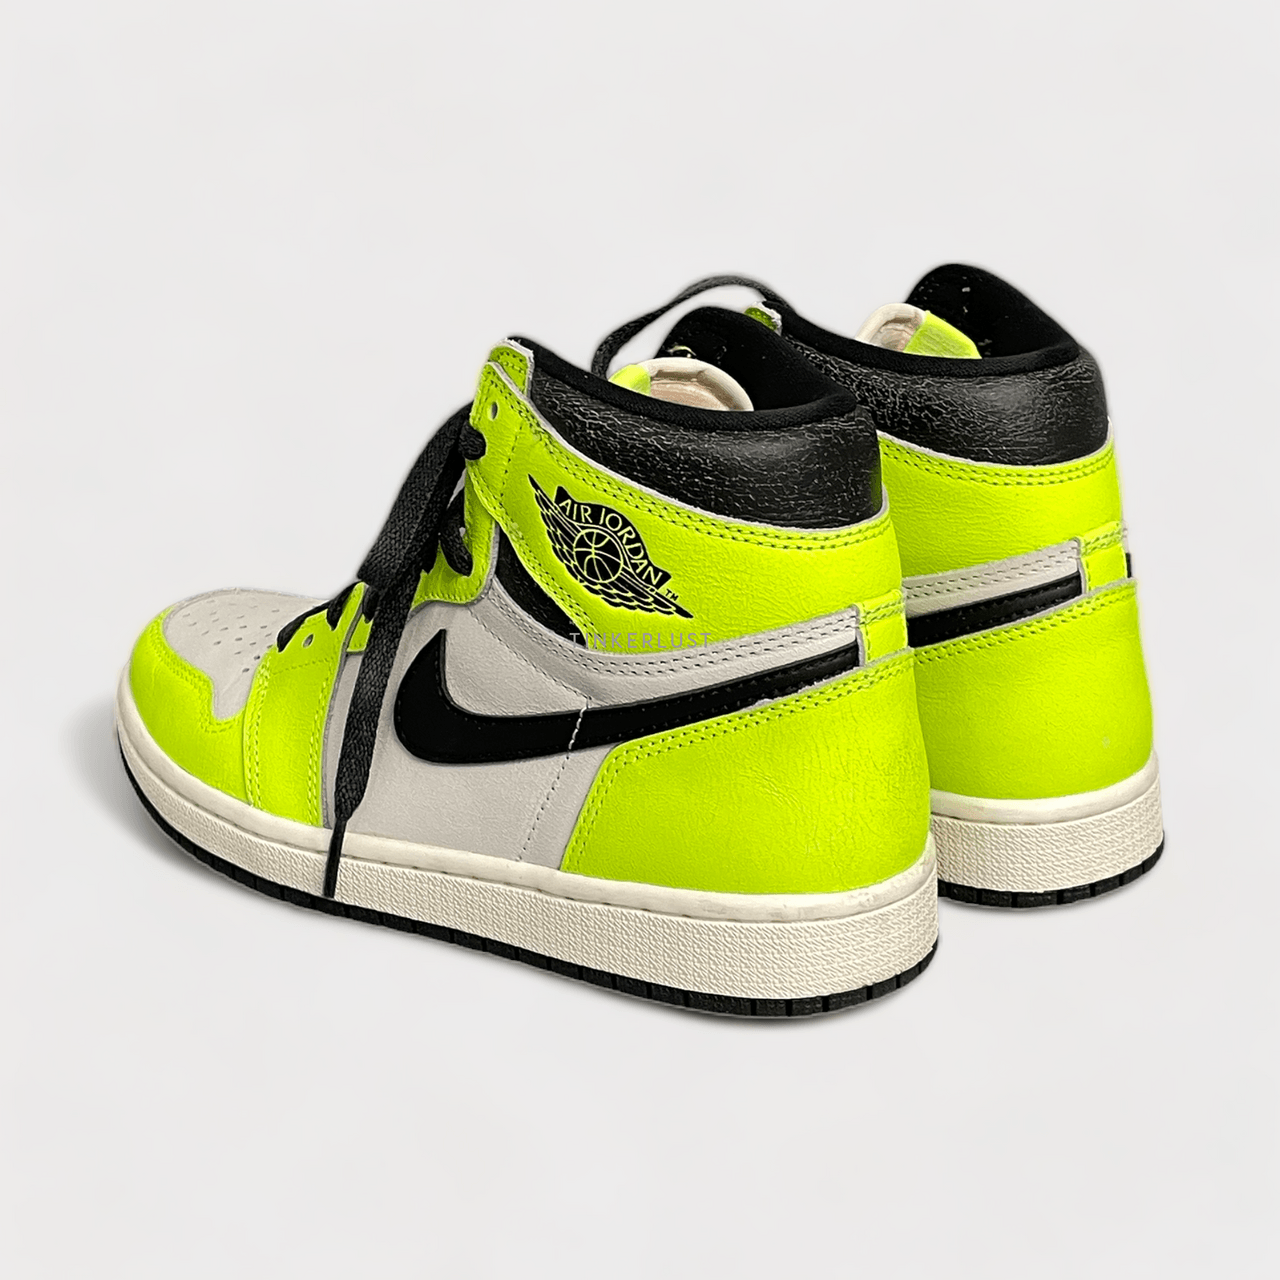 Nike Air Jordan 1 Retro High OG 'Visionaire' 555088-702 Shoes